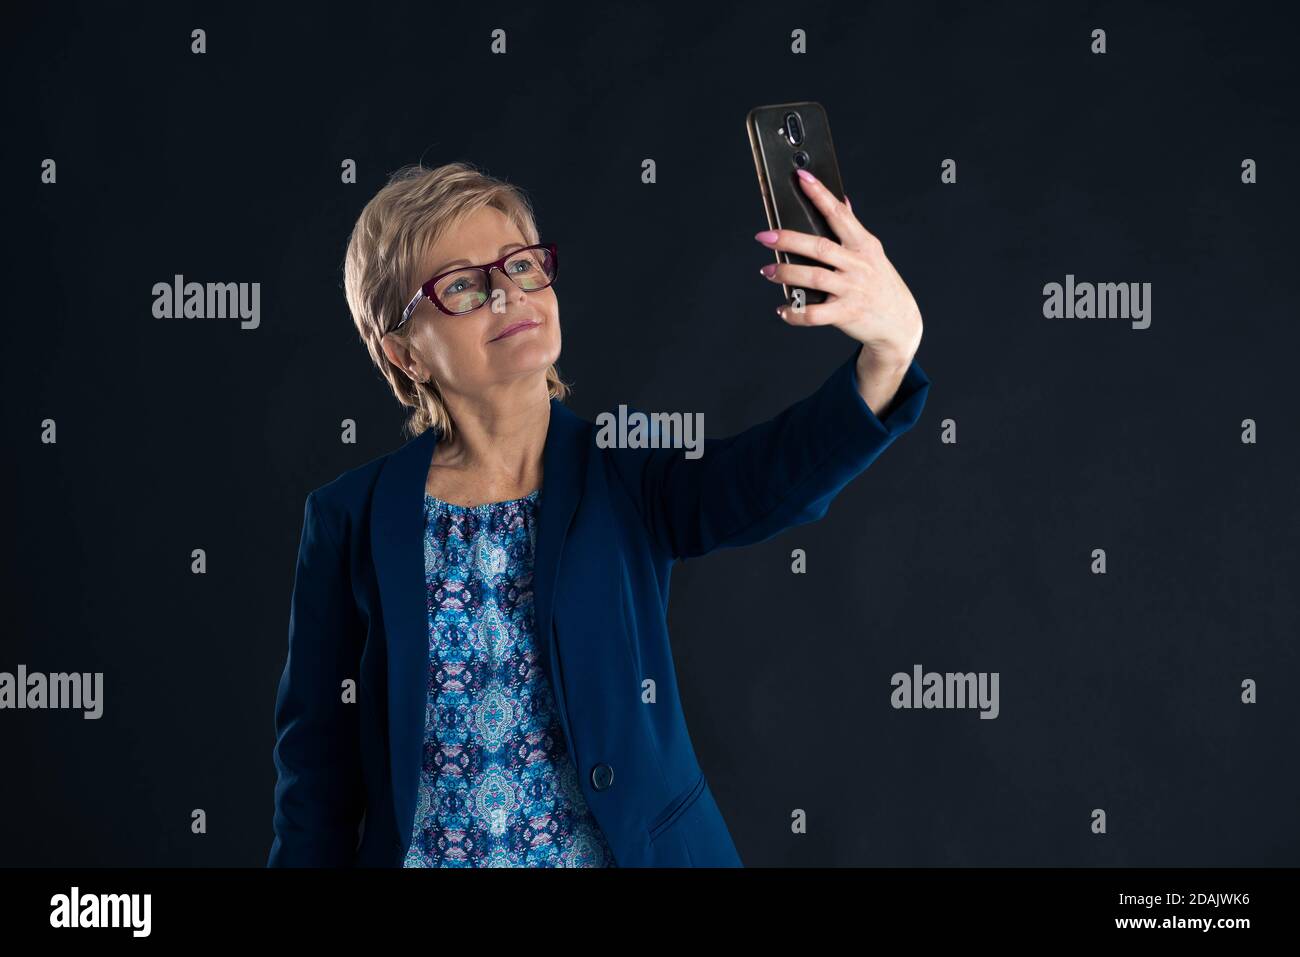 Older businesswoman taking a selfie on a dark background Stock Photo